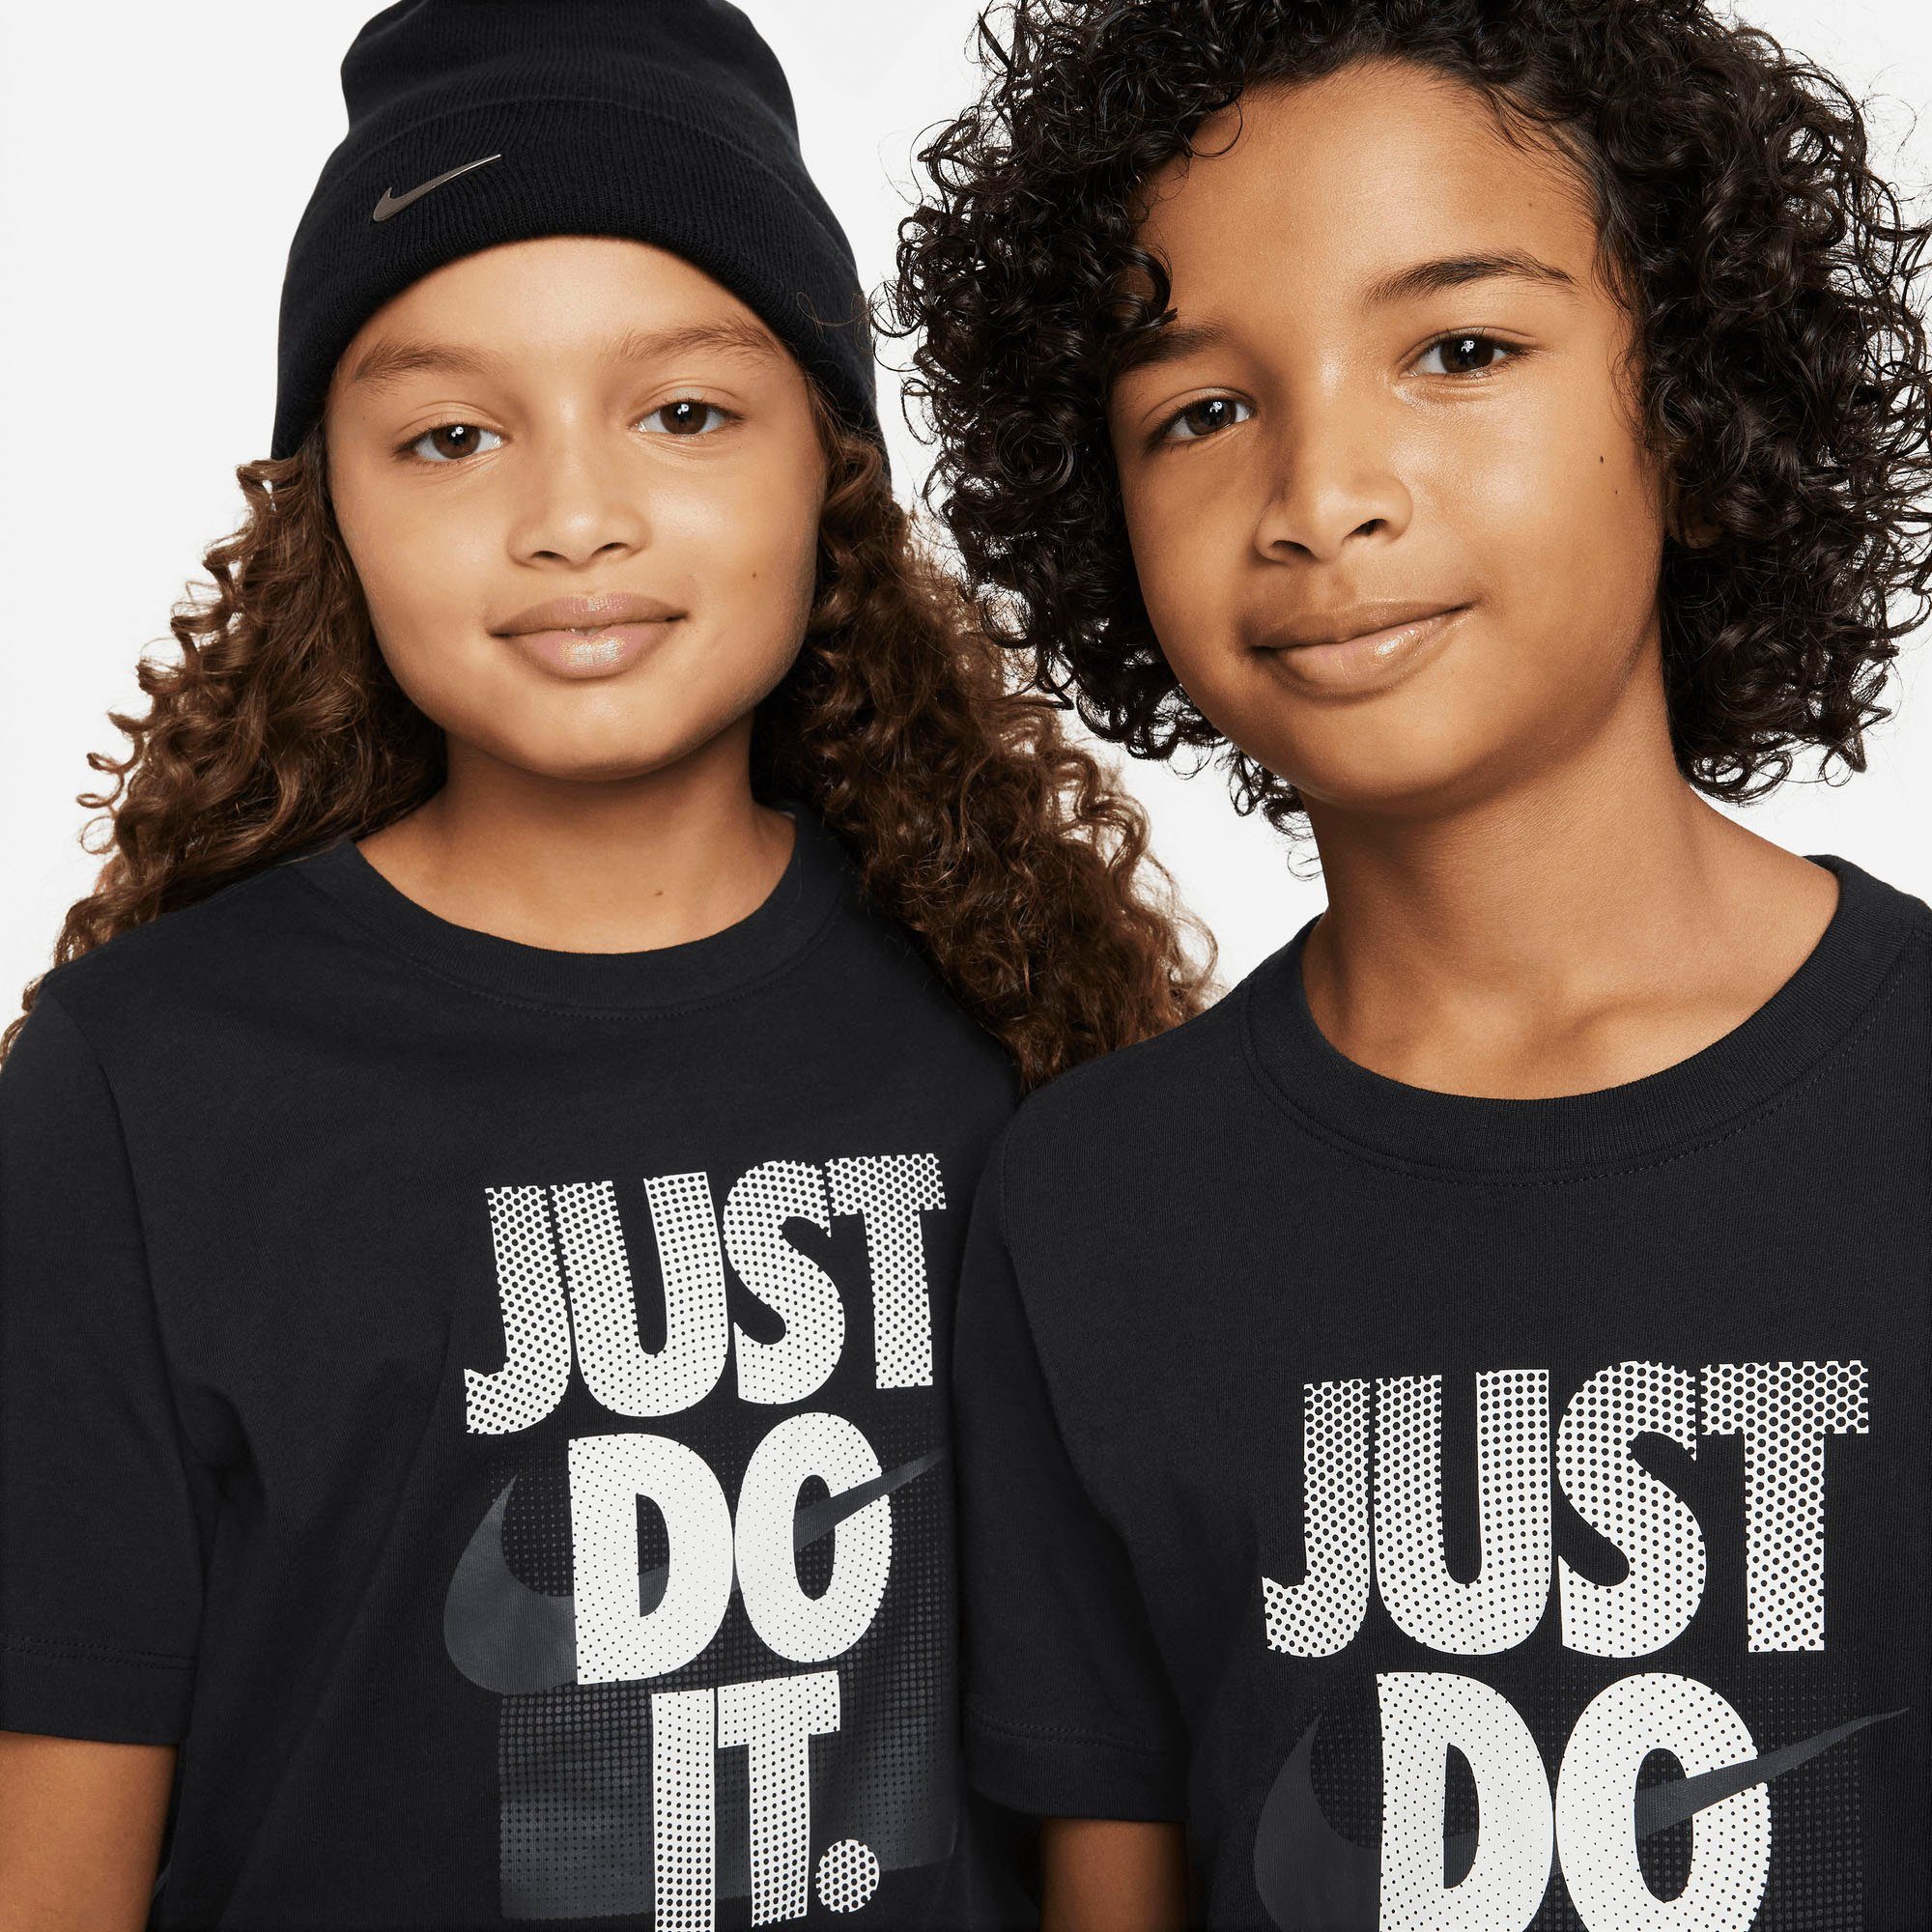 Nike Sportswear T-Shirt T-Shirt Kids' schwarz Big